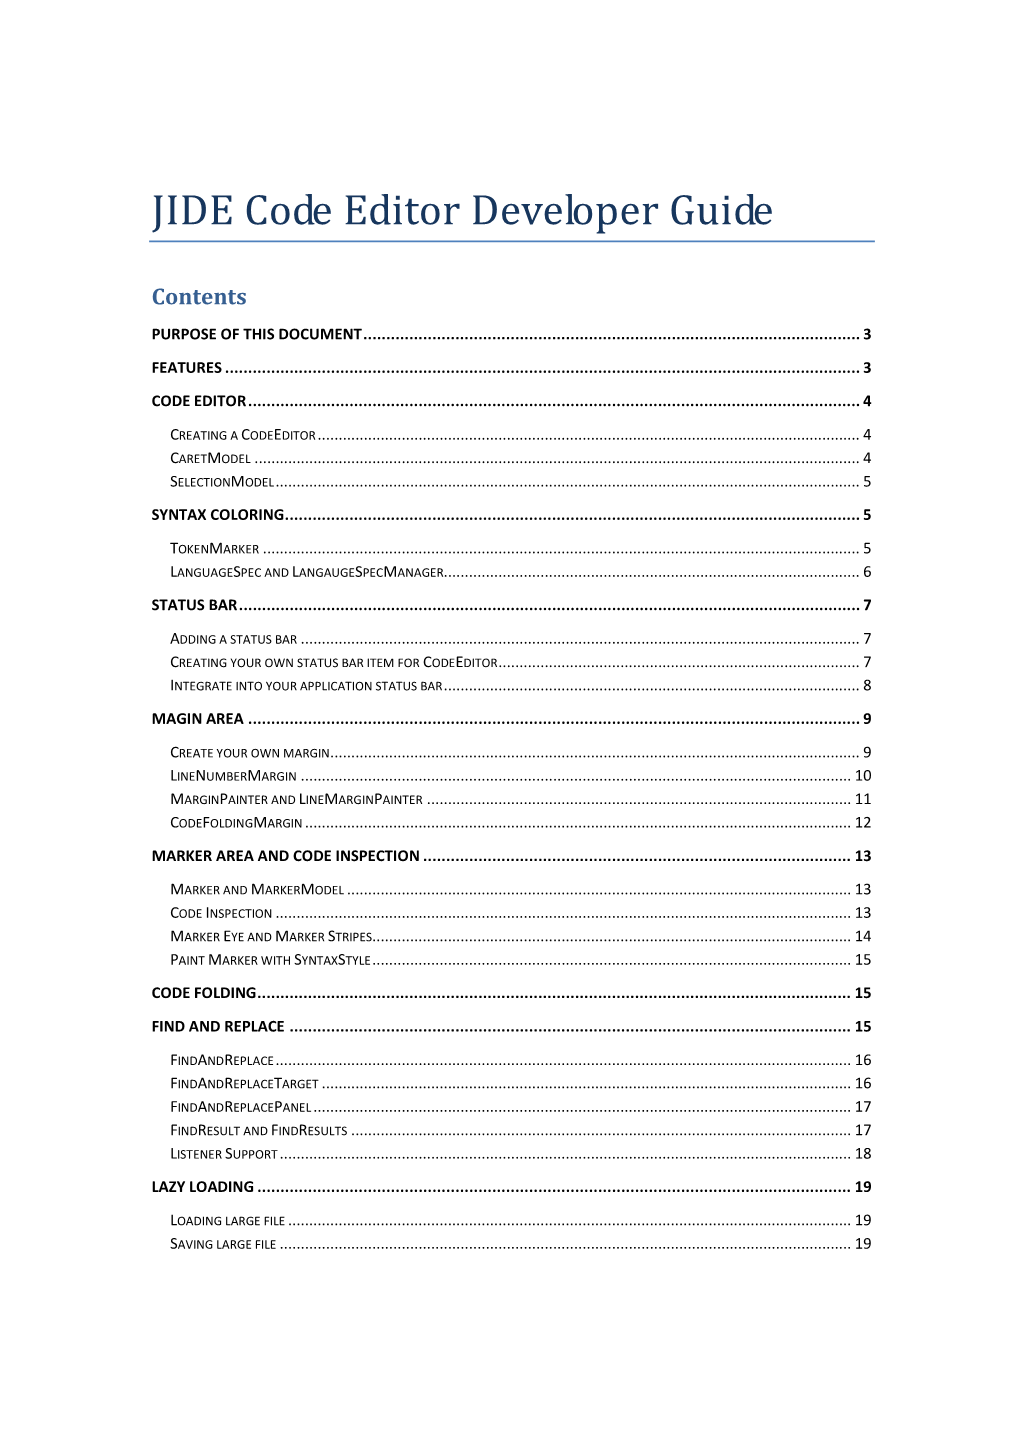 JIDE Code Editor Developer Guide